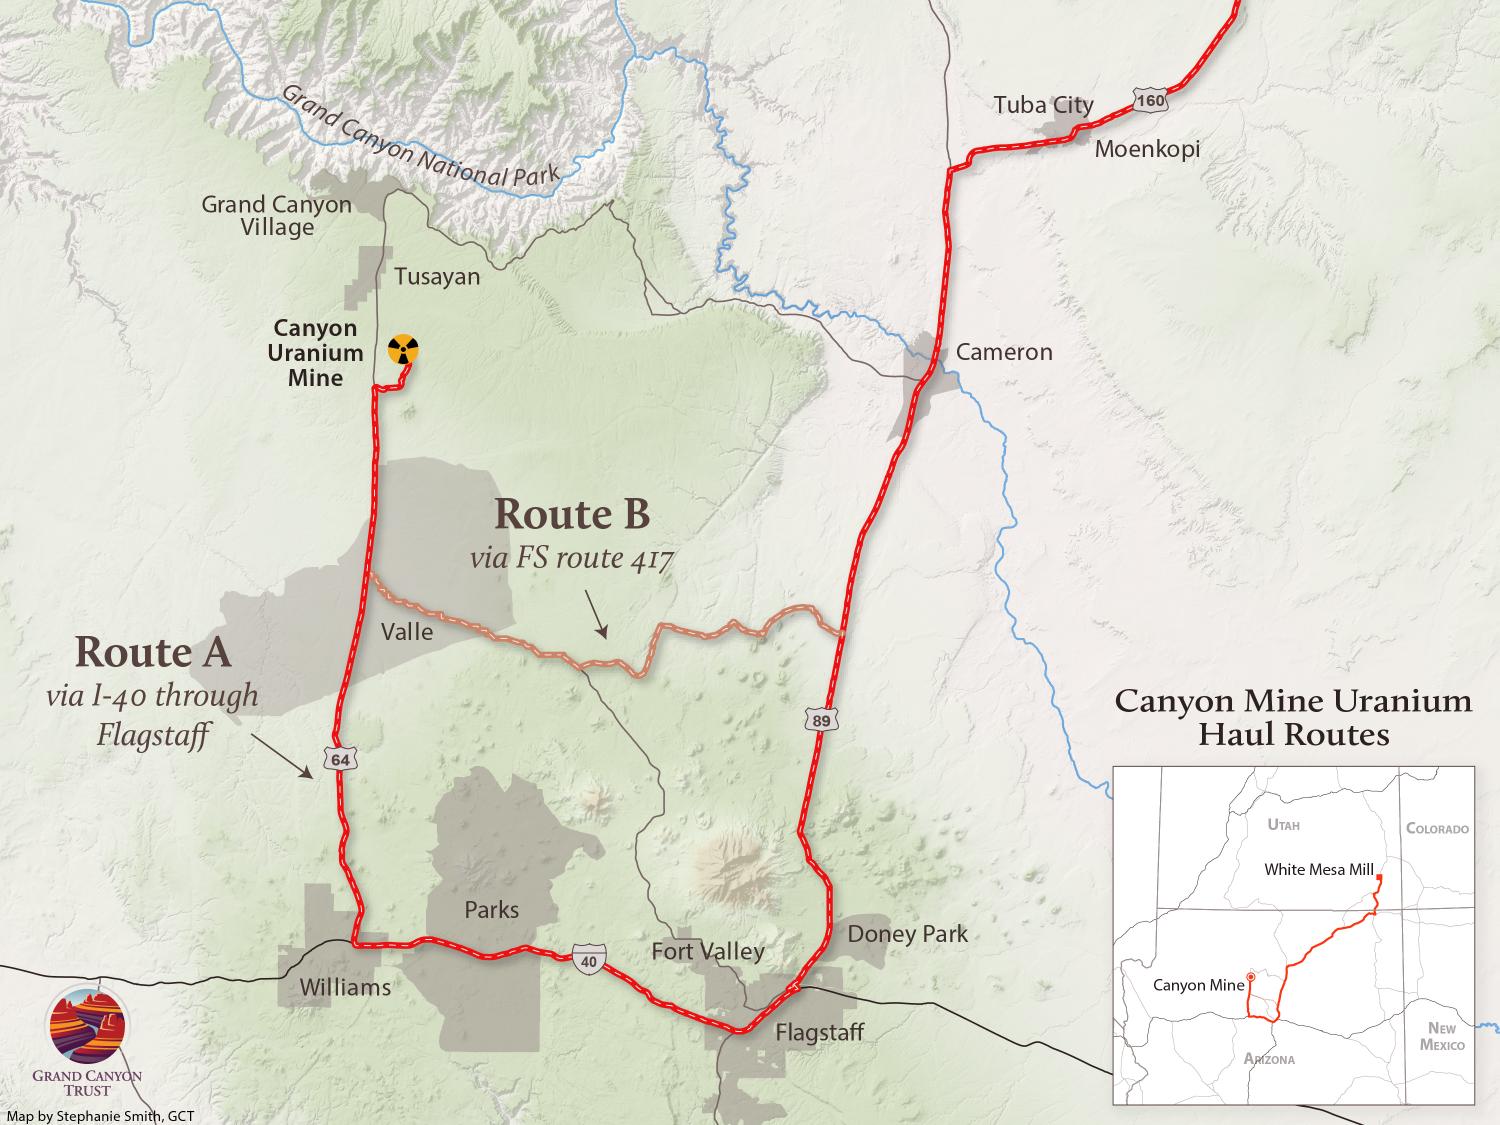 Canyon Mine uranium haul route